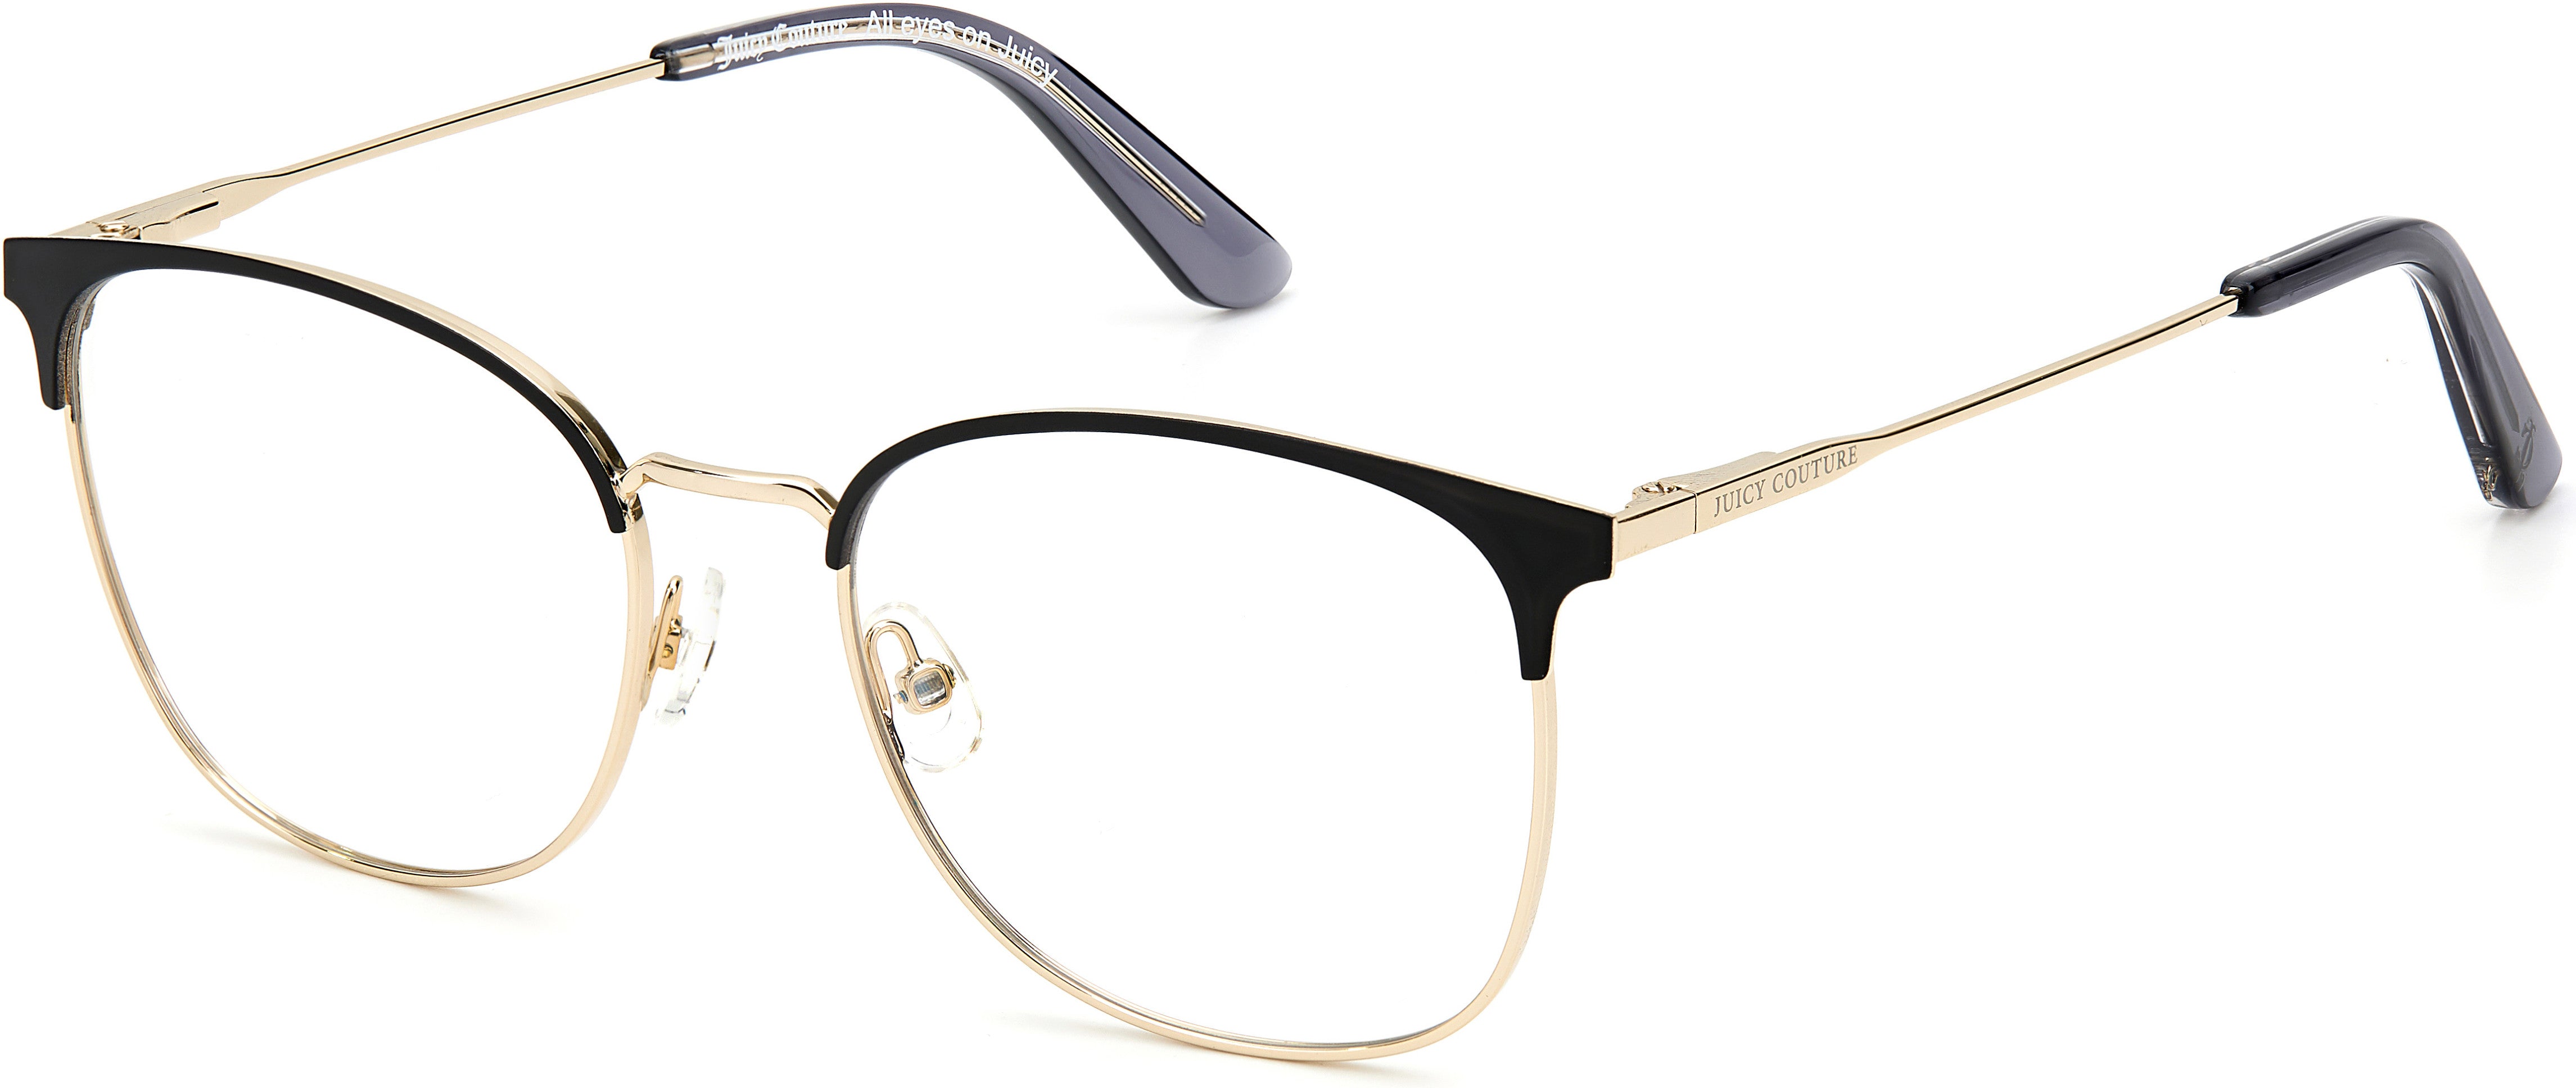 Juicy Couture Juicy 212 Oval Modified Eyeglasses 0003-0003  Matte Black (00 Demo Lens)